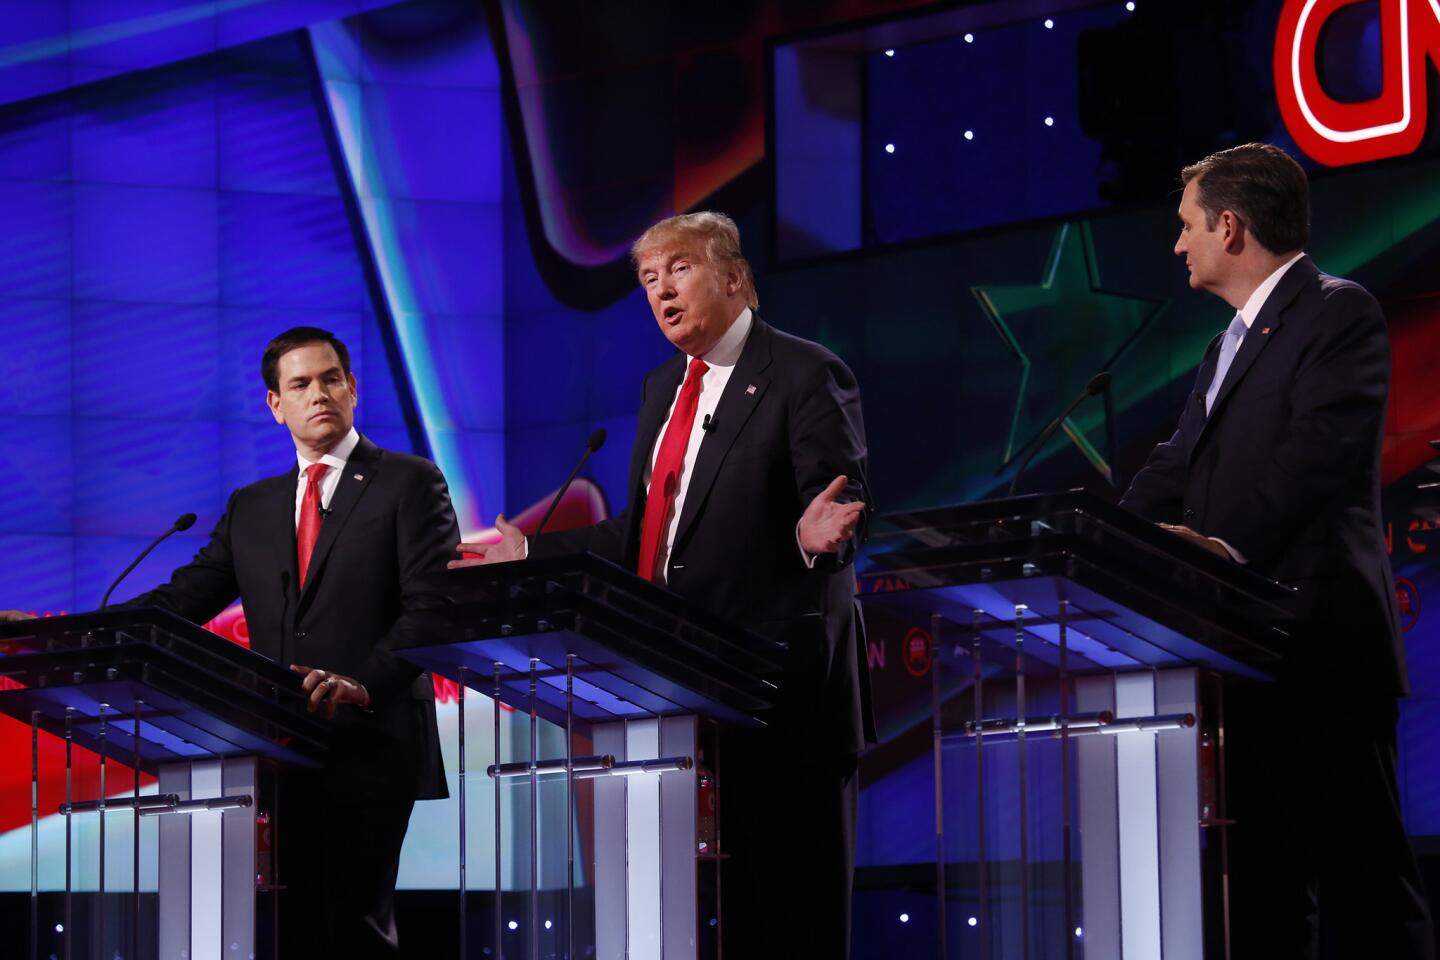 Marco Rubio, Donald Trump, and Ted Cruz